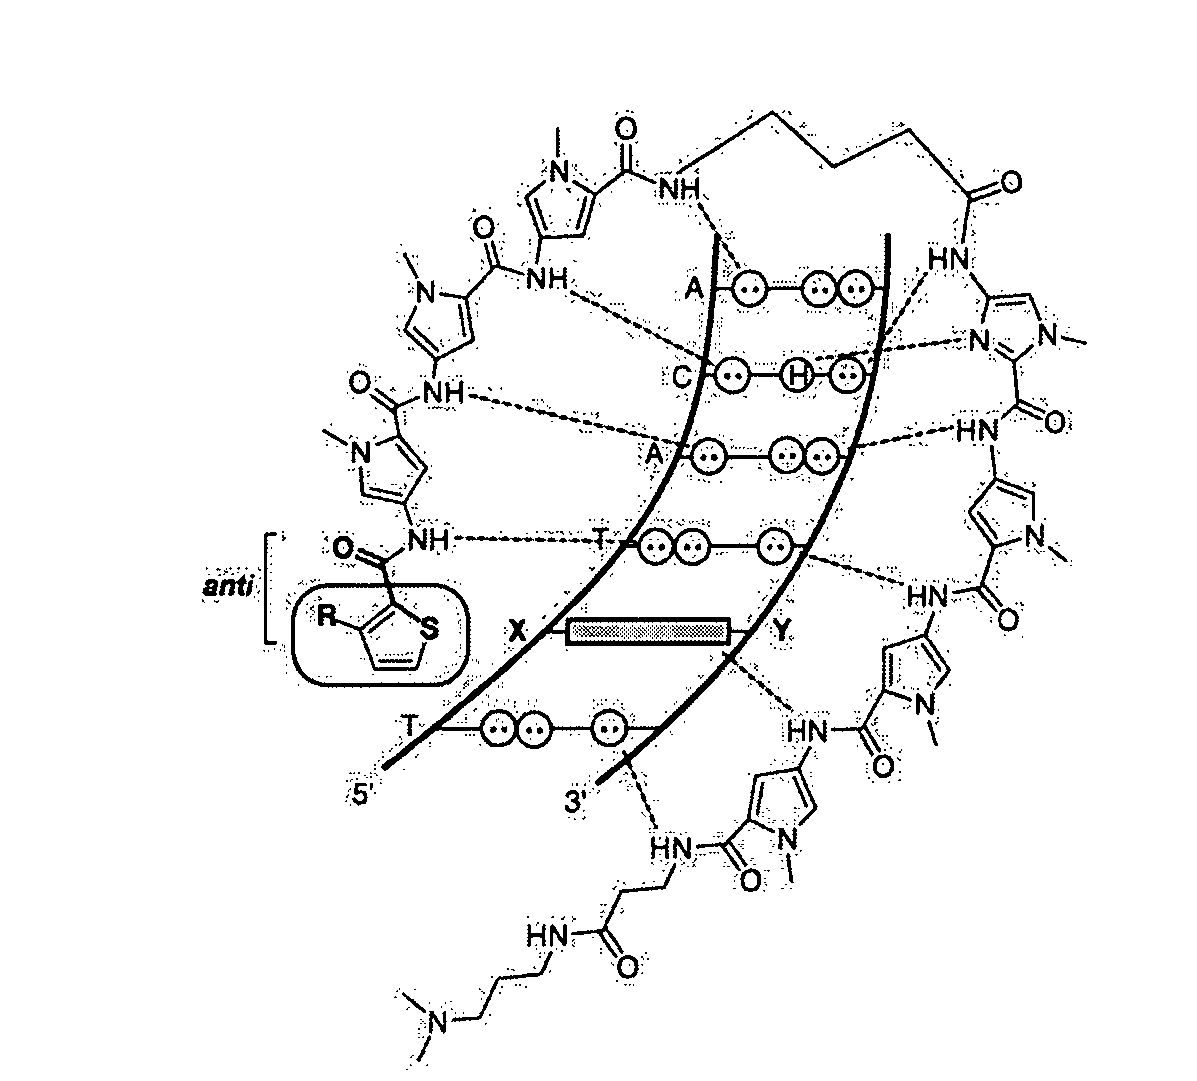 DNA-binding polymers